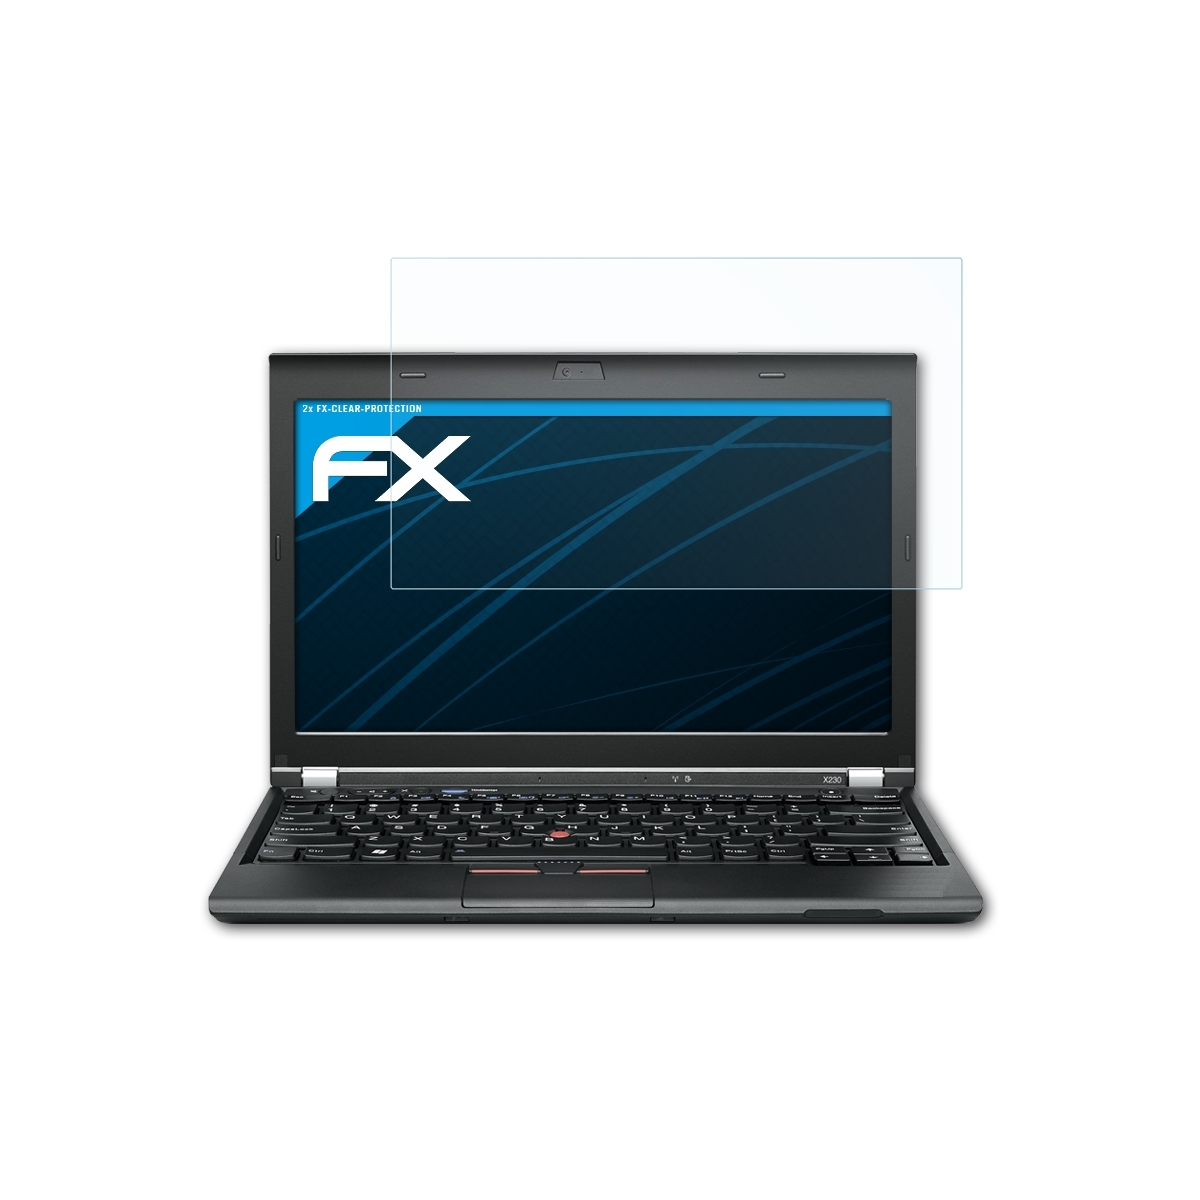 ATFOLIX 2x ThinkPad Lenovo X230t) Displayschutz(für FX-Clear